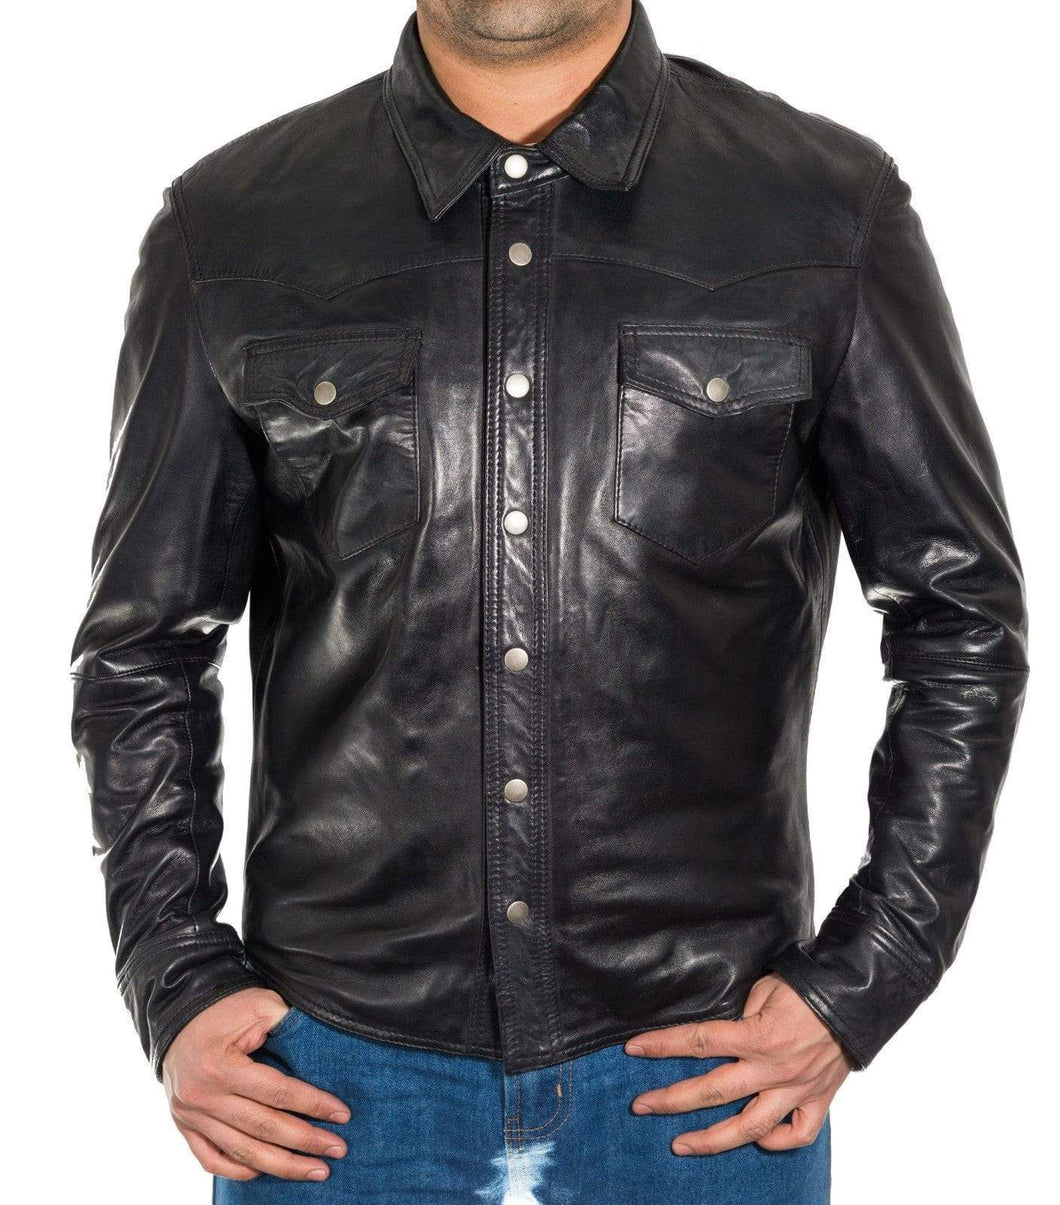 Men's Genuine Black Lambskin Leather Shirts Slim fit Police Military Style Shirt - leathersguru